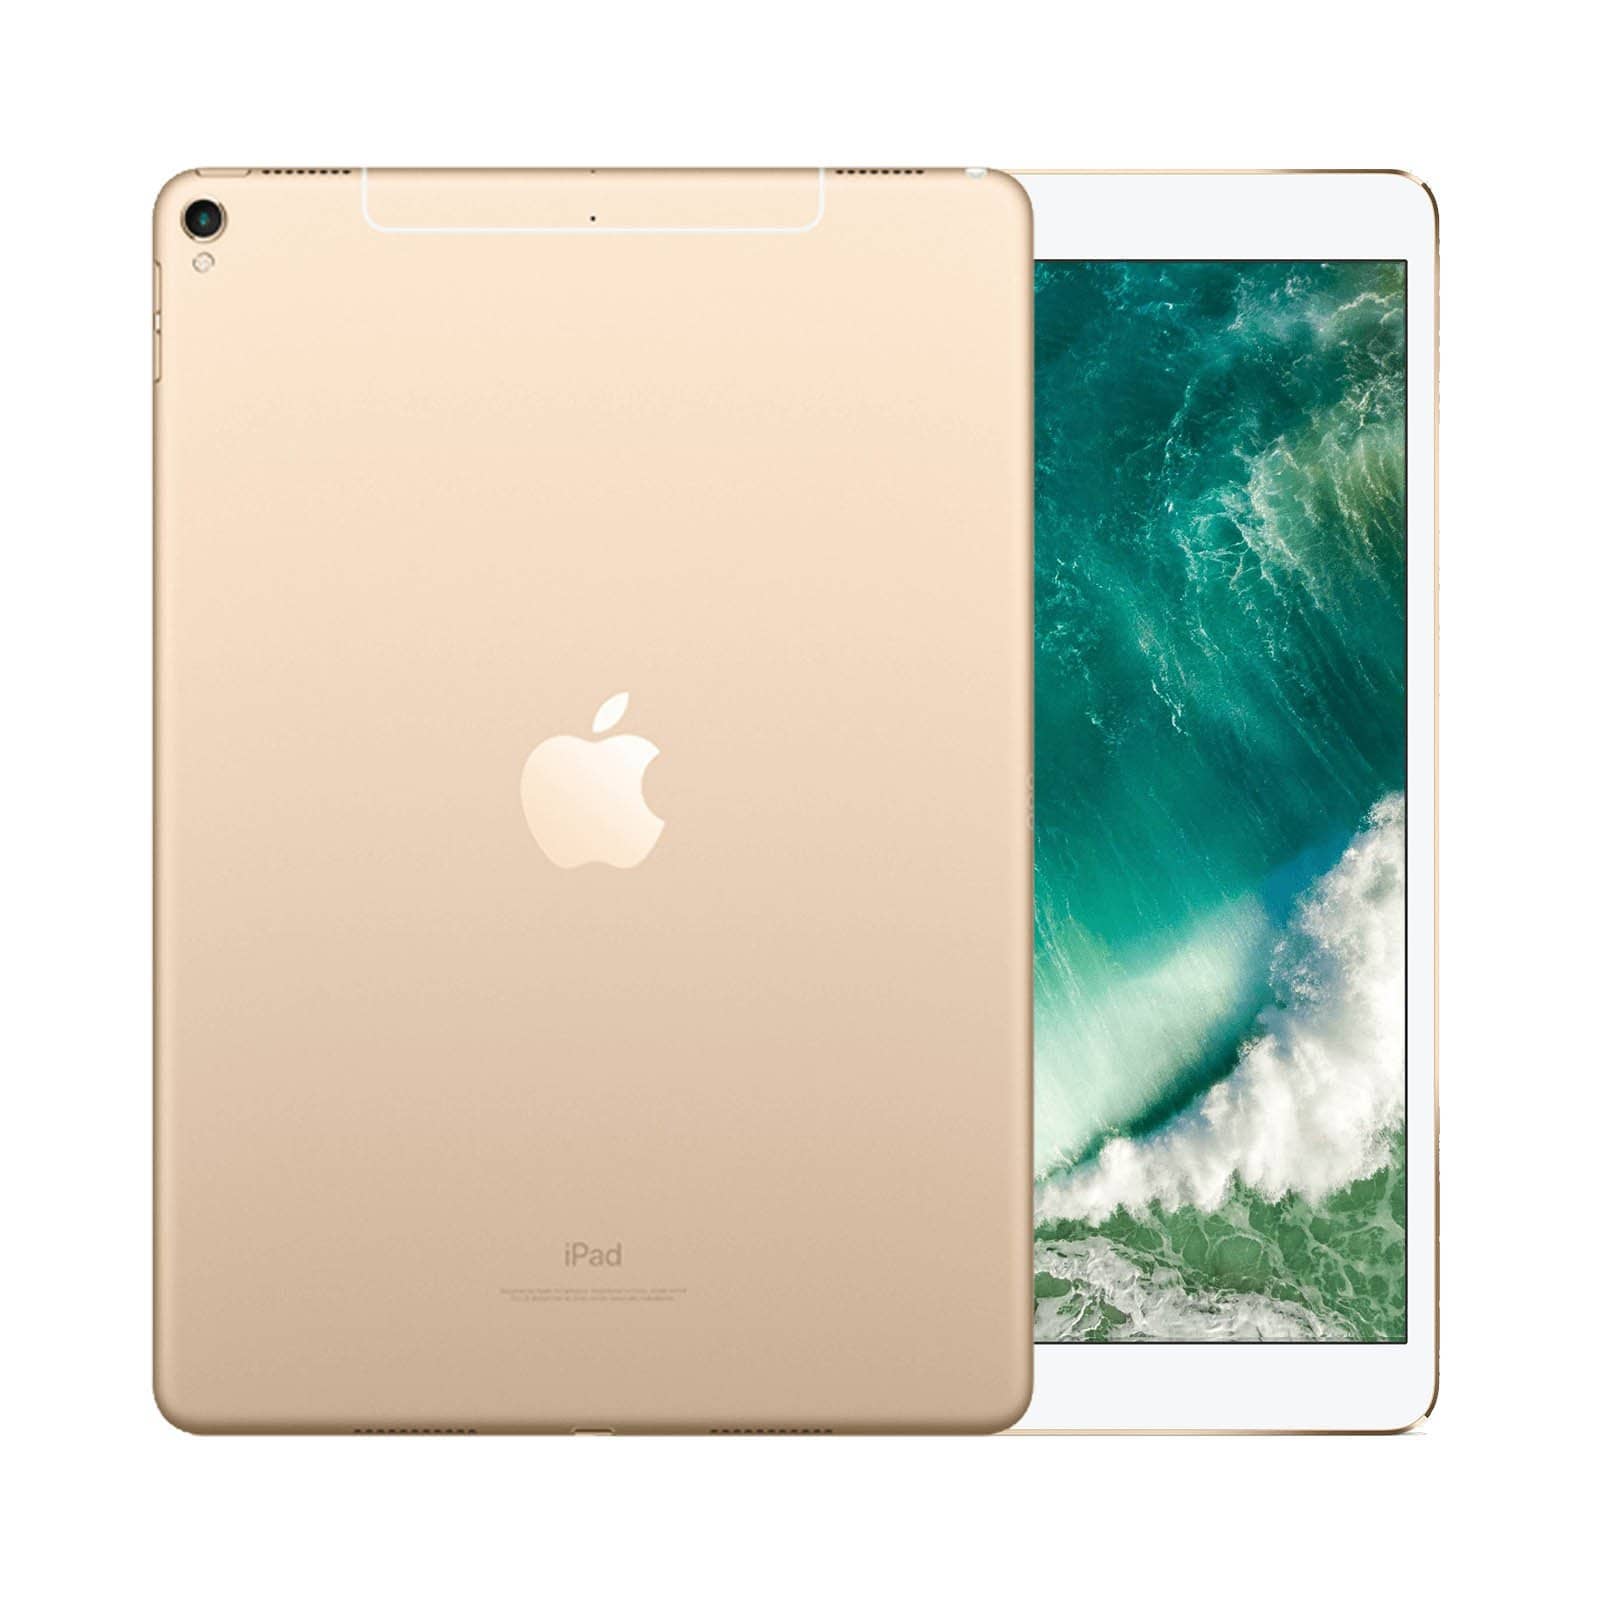 iPad Pro 10.5 Inch 512GB Gold Good - Unlocked